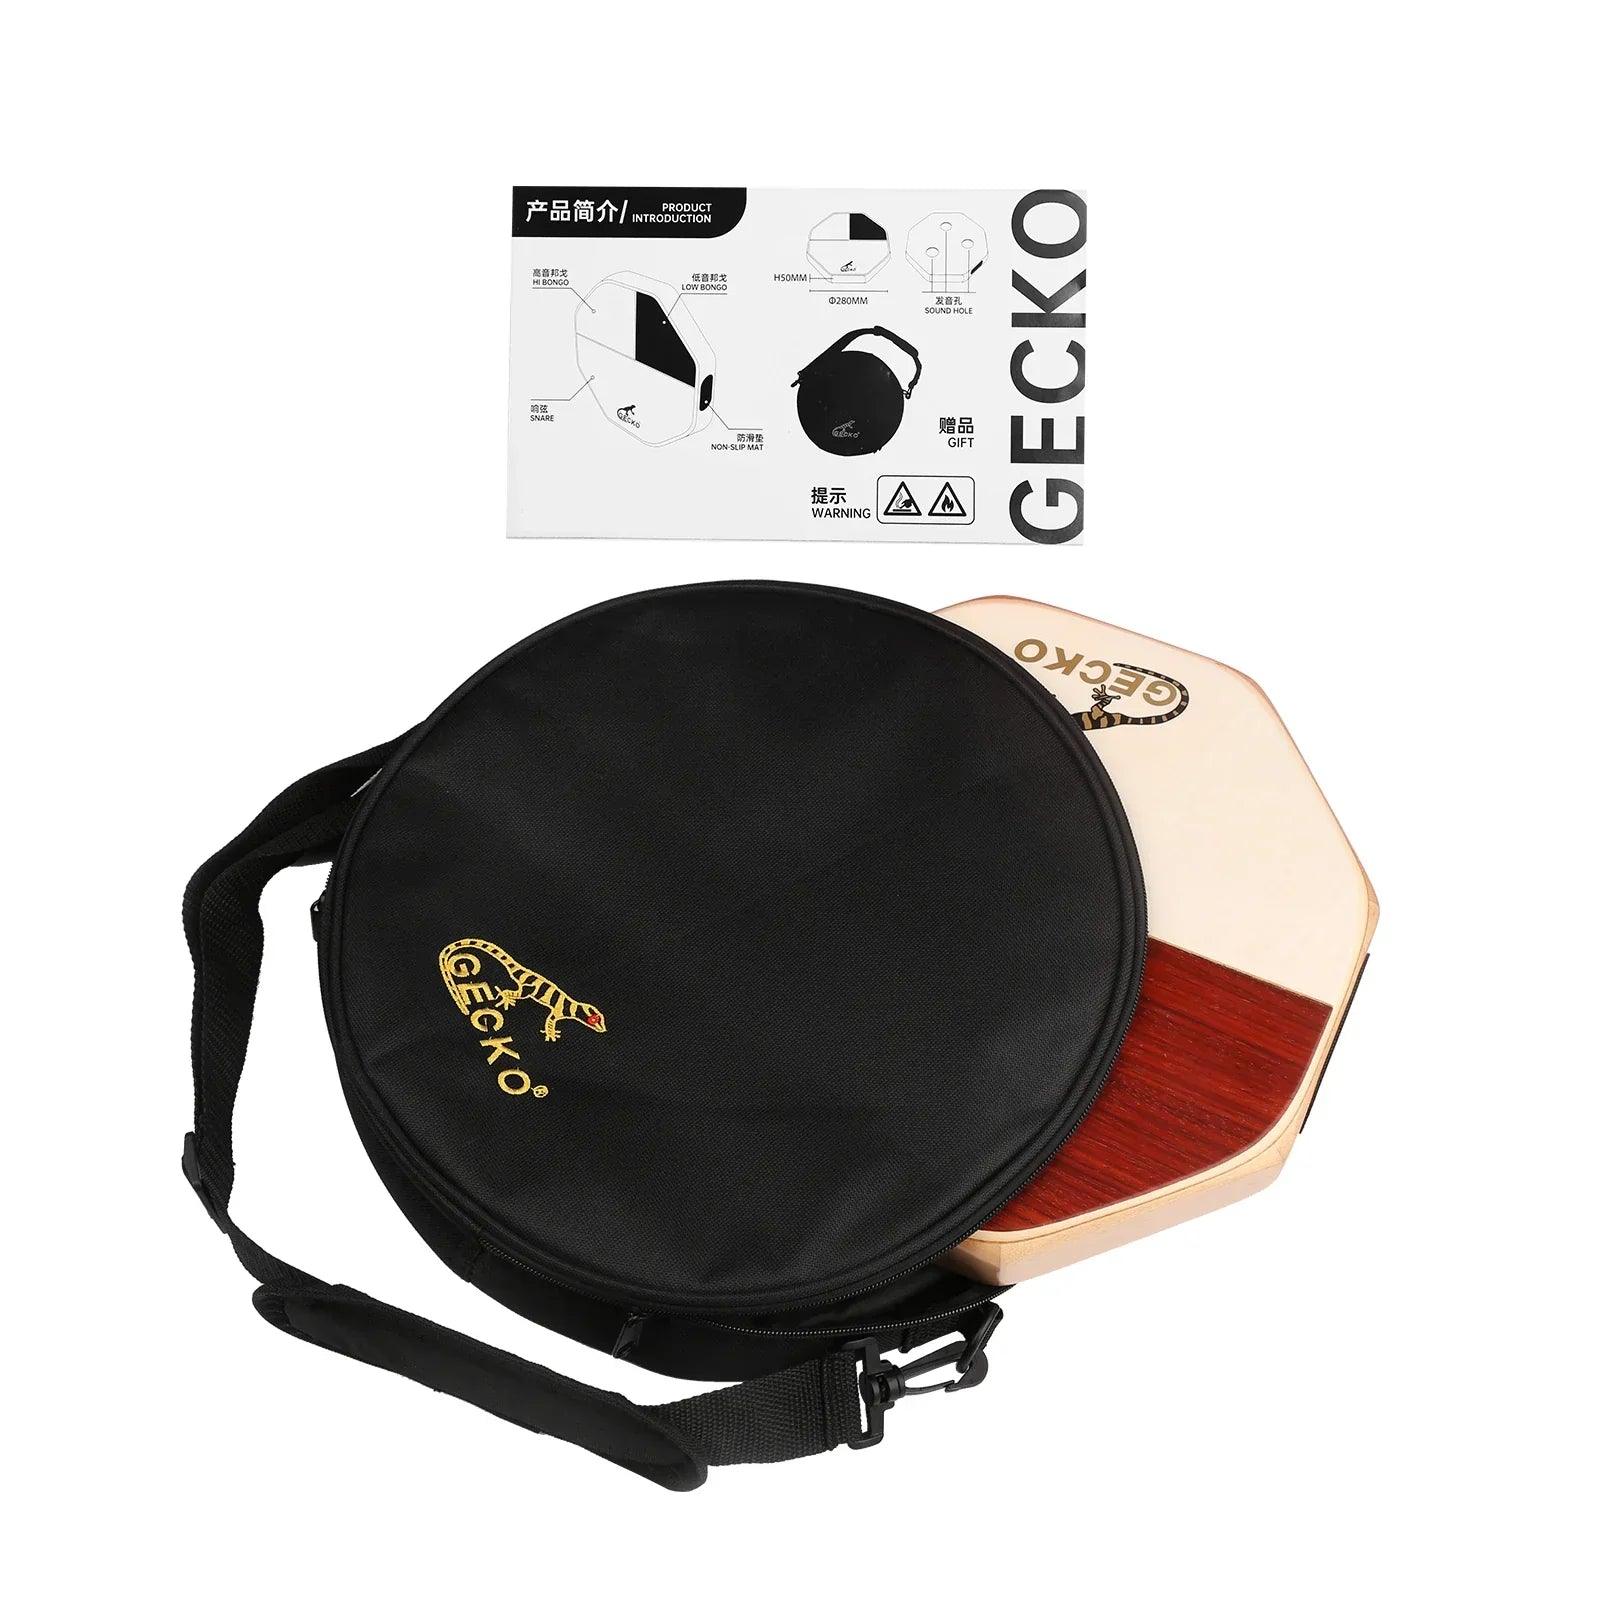 Gecko Cajon Travel Bongo Drum Wood Percussion Triple Sound w/Bag unique musical instrument Christmas gift